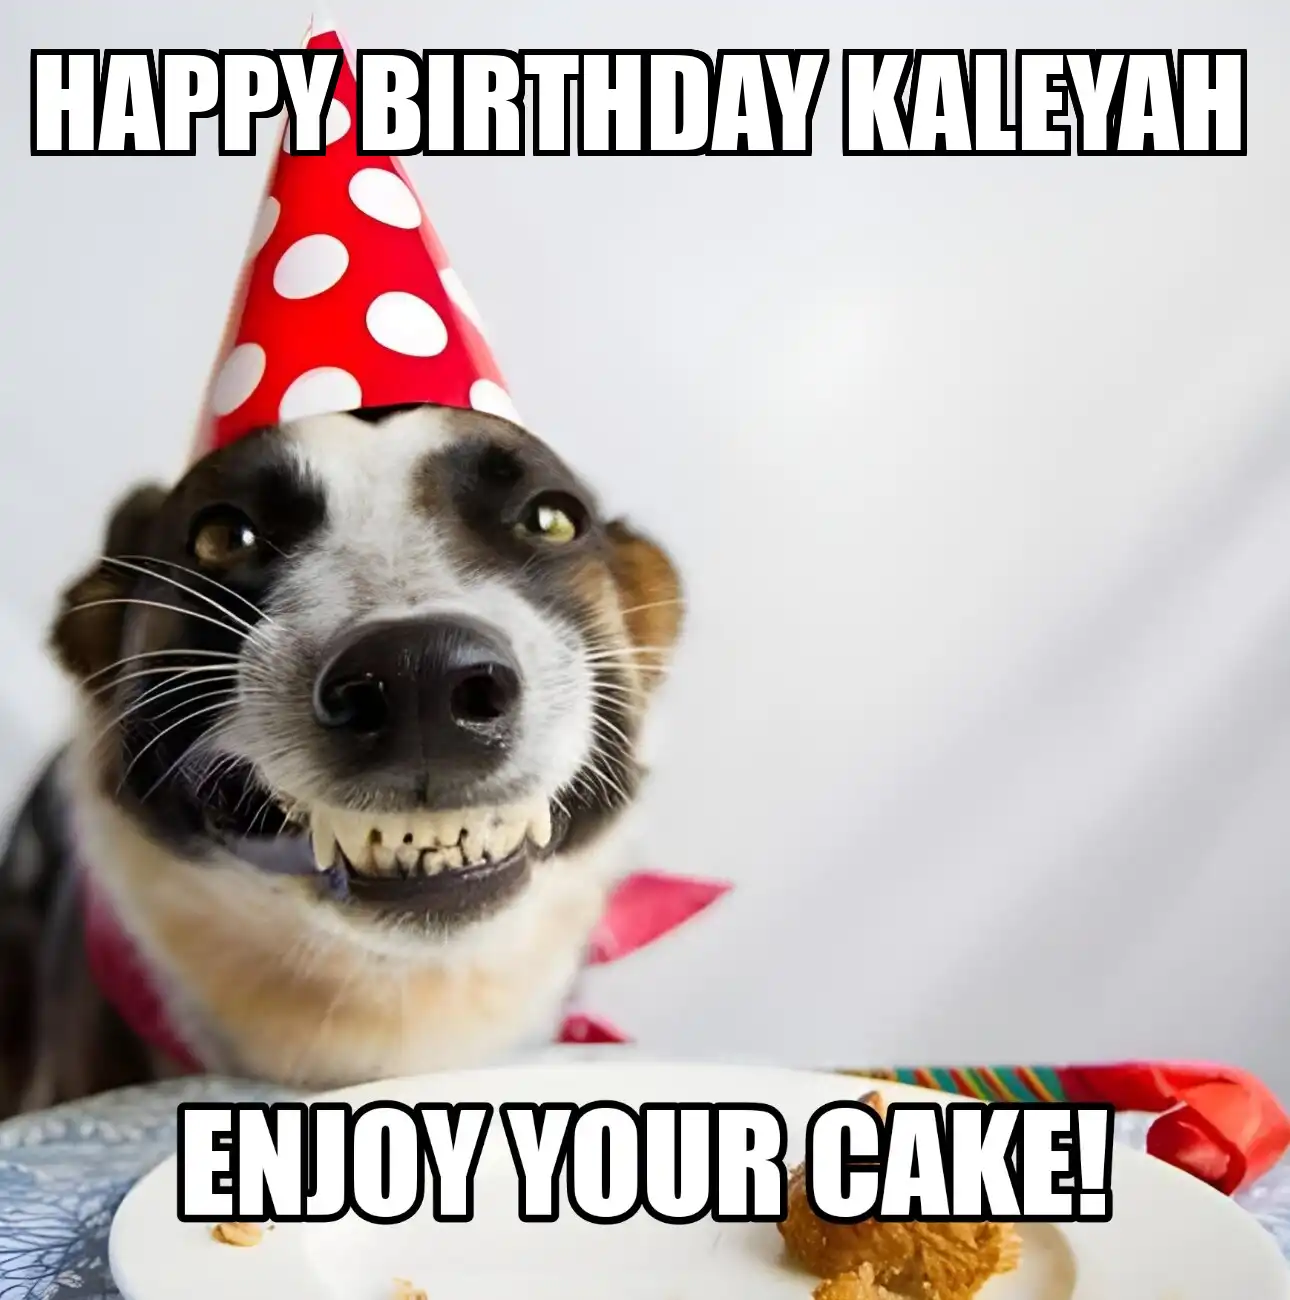 Happy Birthday Kaleyah Enjoy Your Cake Dog Meme